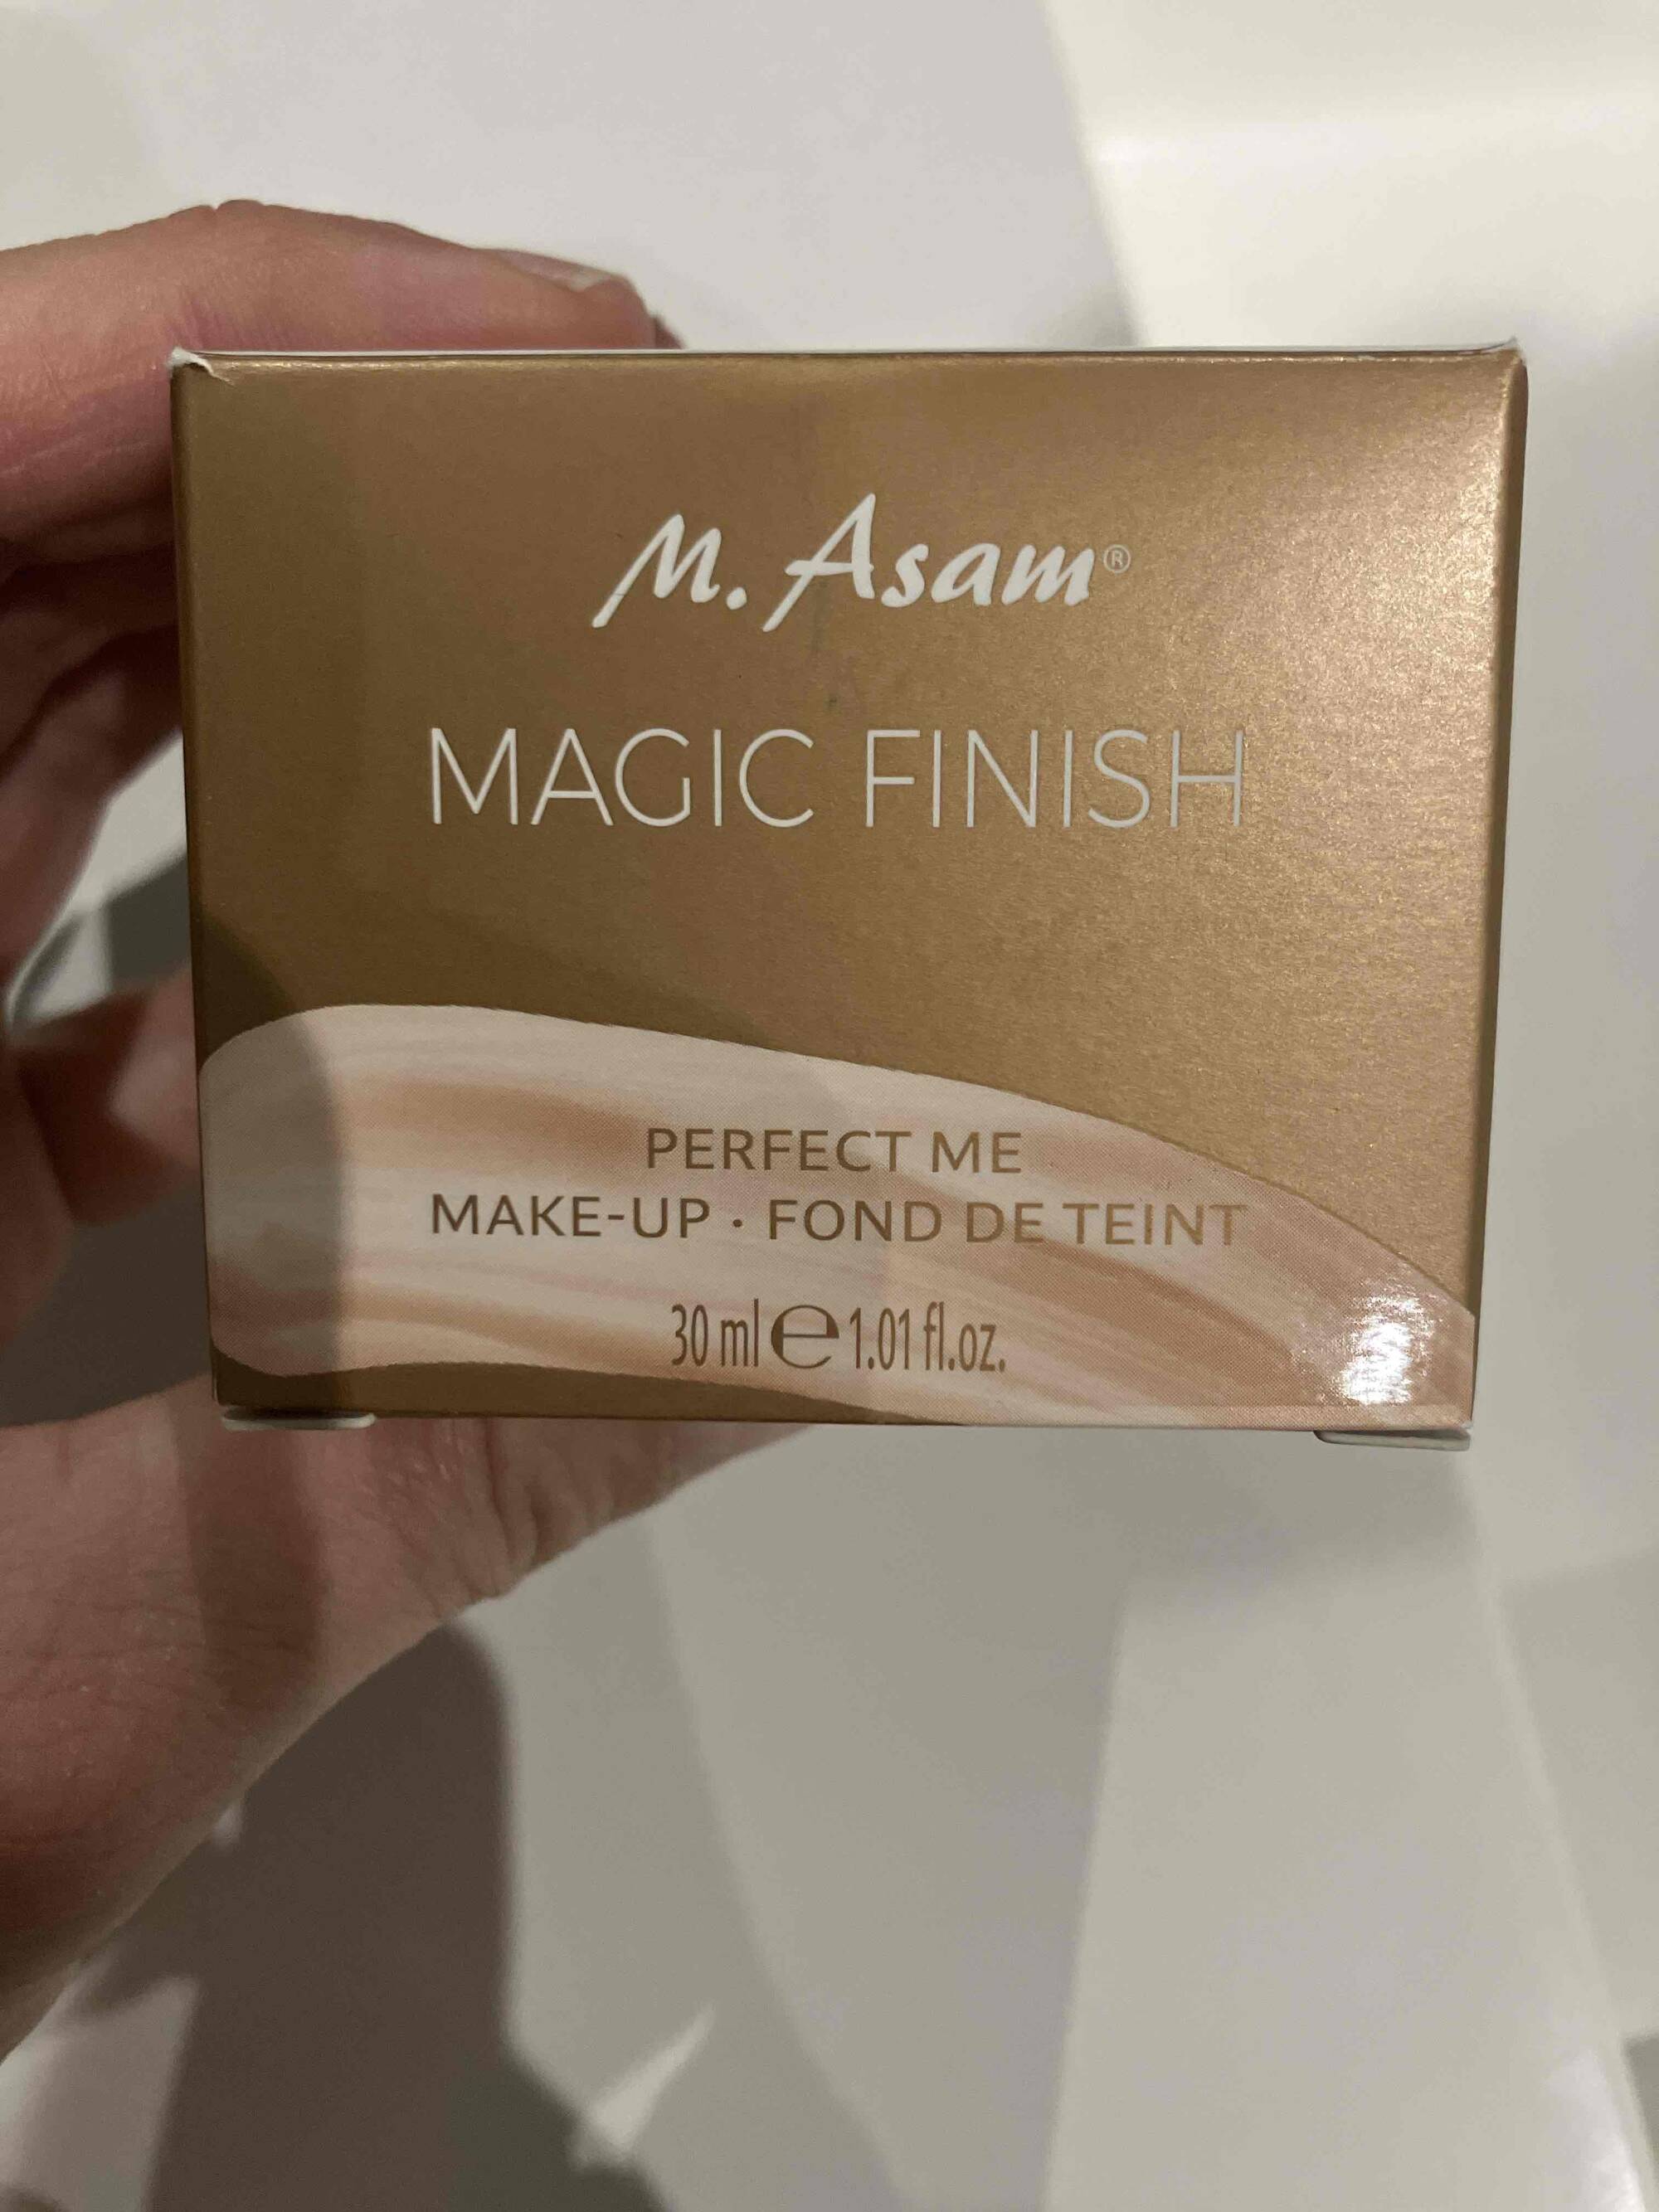 M. ASAM - Magic finish perfect me - Fond de teint